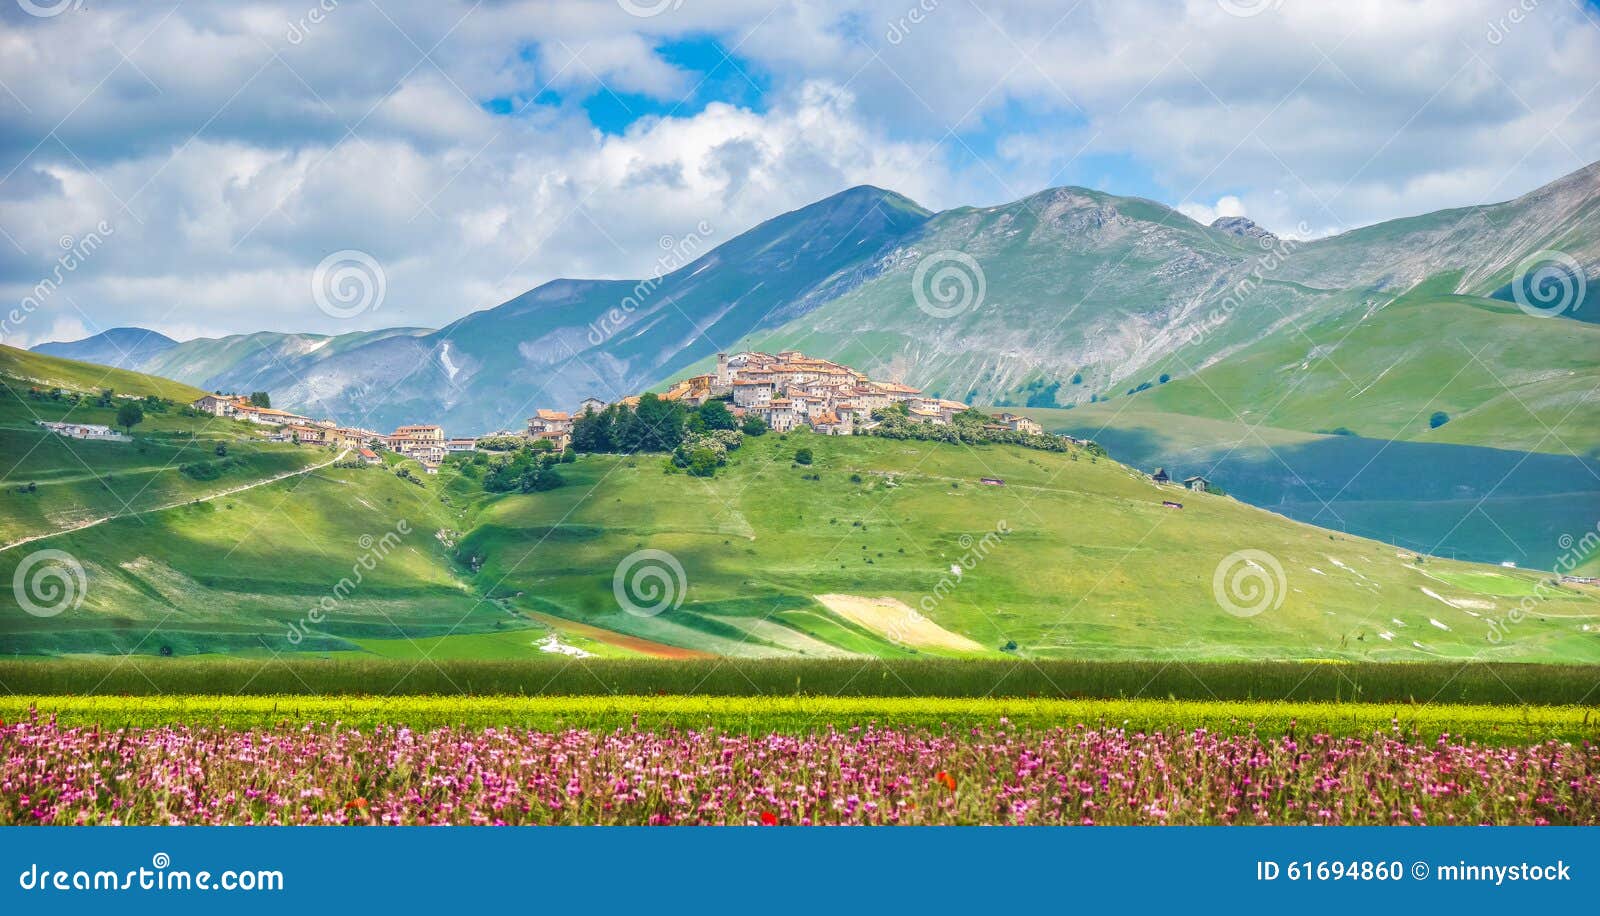 famous castelluccio di norcia with beautiful summer landscape, umbria, italy